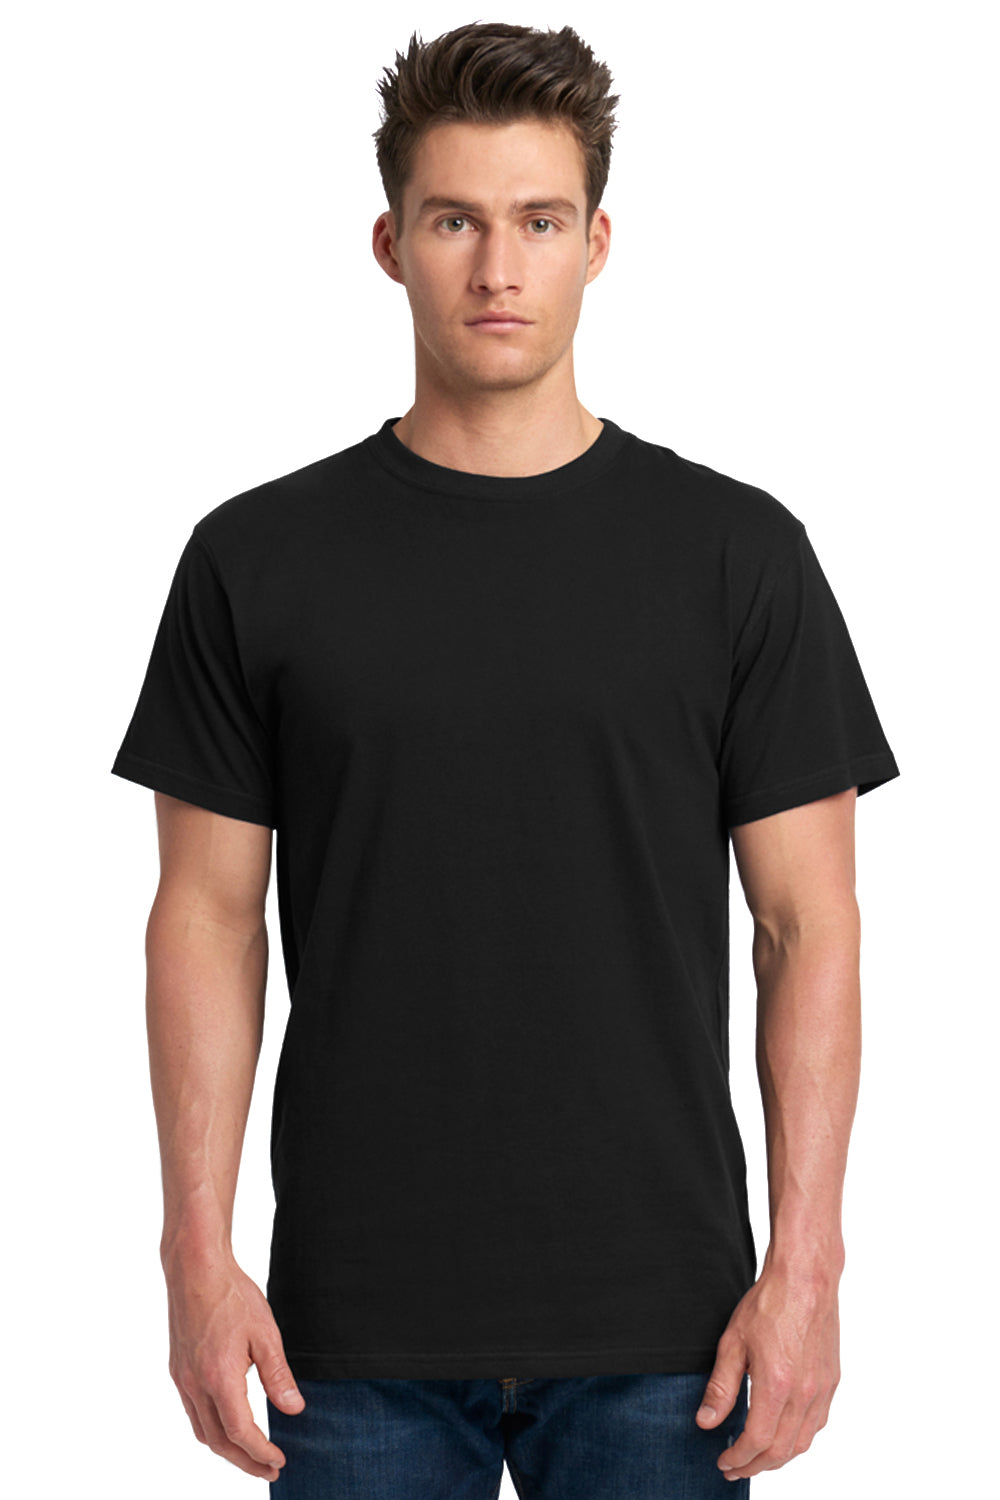 Next Level 7410 Mens Inspired Dye Jersey Short Sleeve Crewneck T-Shirt Black Front